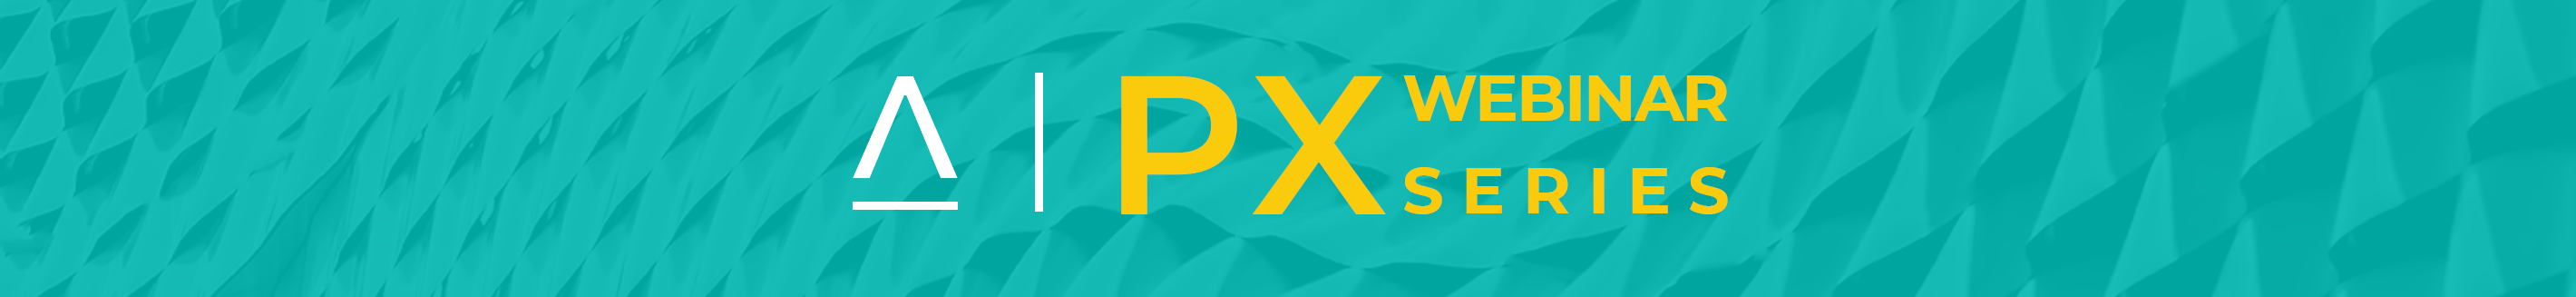 PX Masterclass web banner